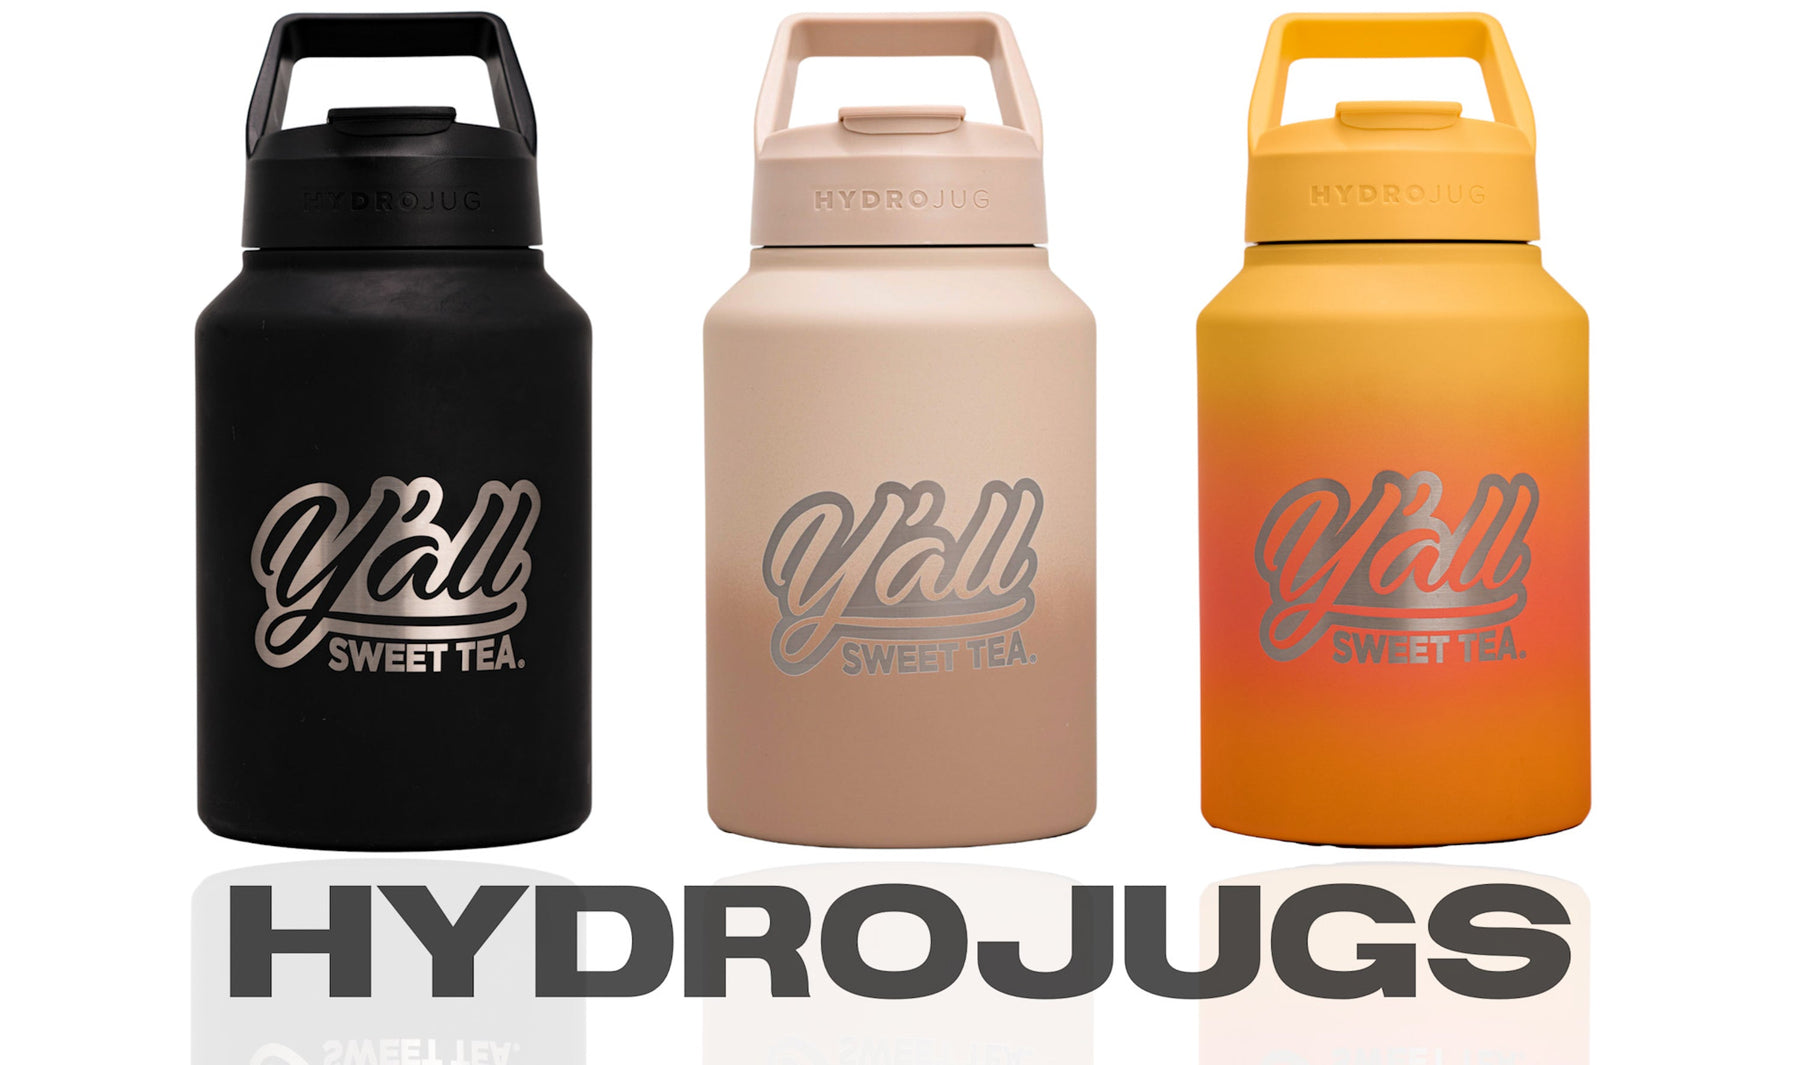 Hydrojug Water Jug - Tan 1/2 Gal